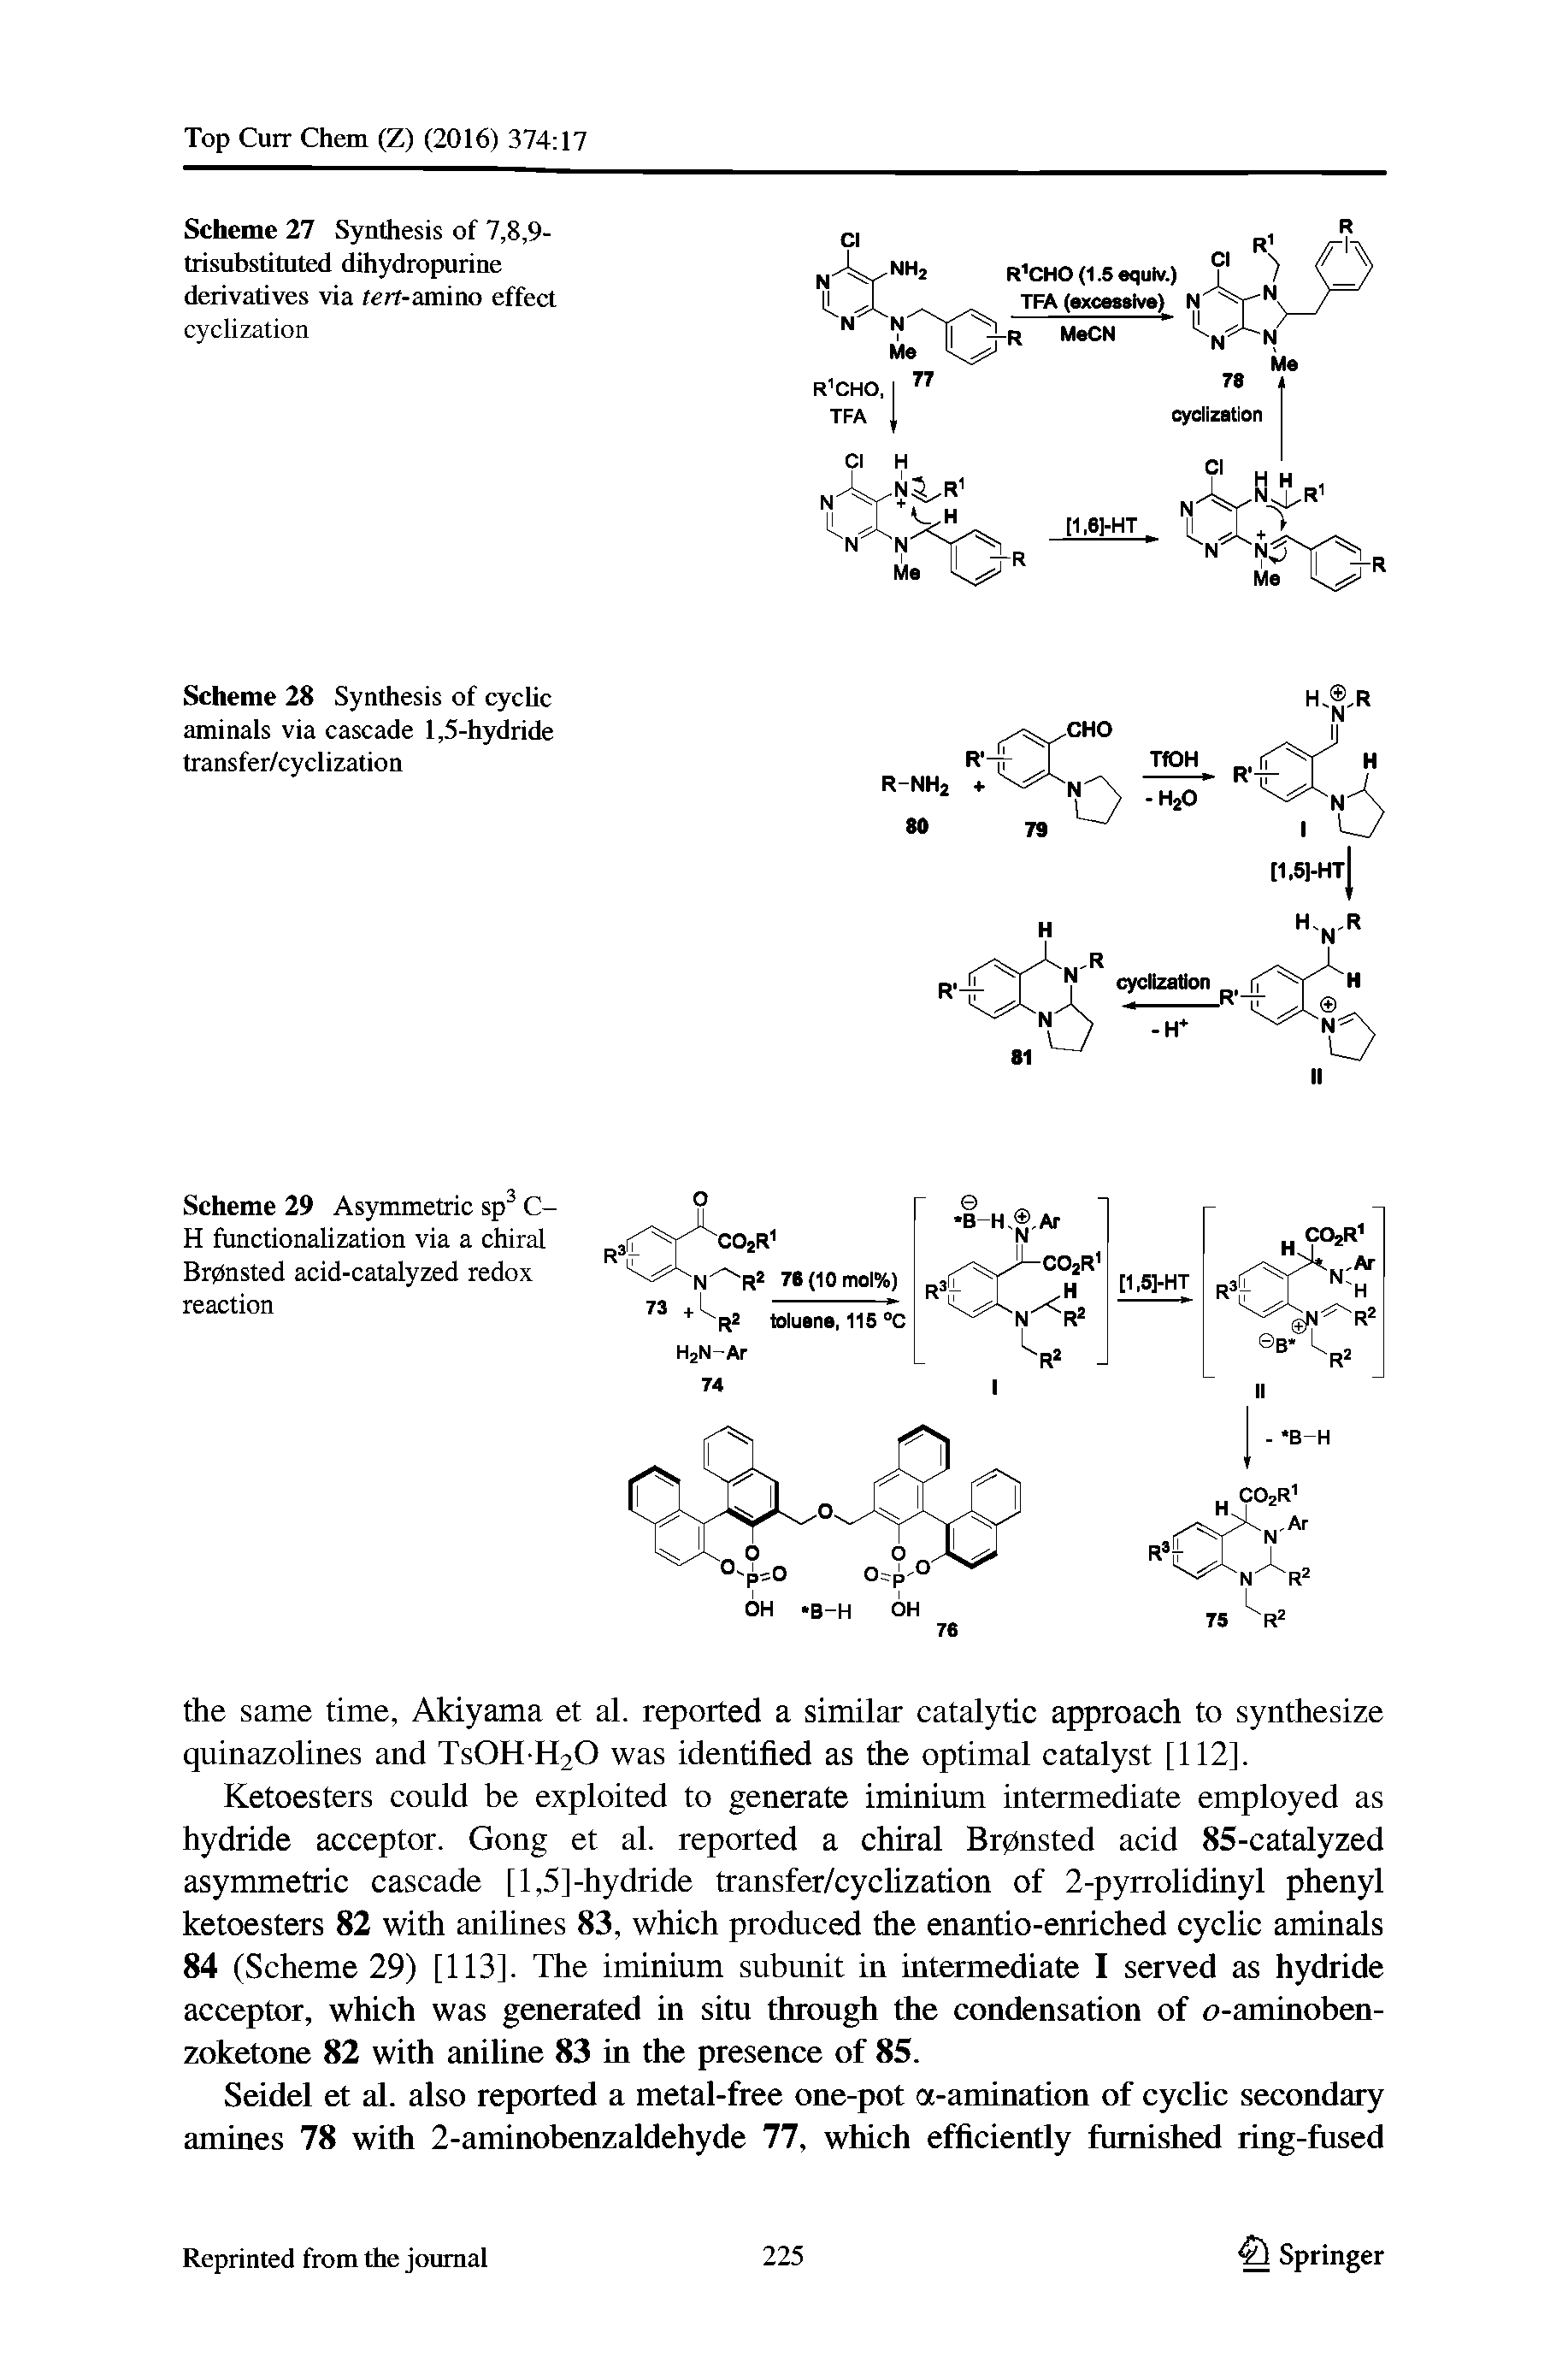 Scheme 28 Synthesis of cyclic aminals via cascade 1,5-hydride transfer/cyclization...